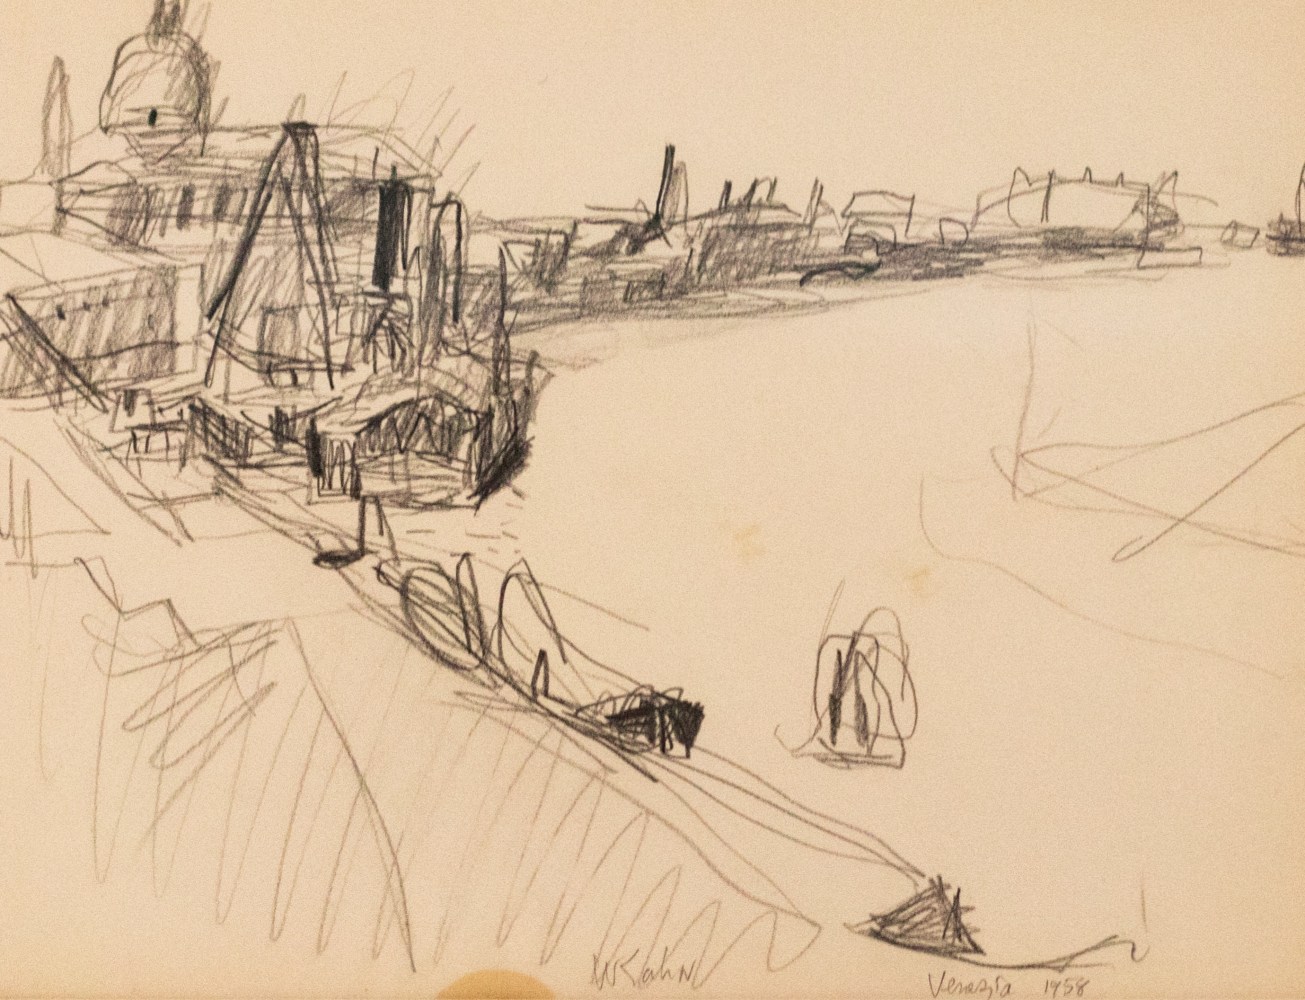 Wolf Kahn, On the Giudecca, 1958, Pencil on paper, 11.5 x 14.75 inches, Wolf Kahn art for sale, Wolf Kahn Drawings